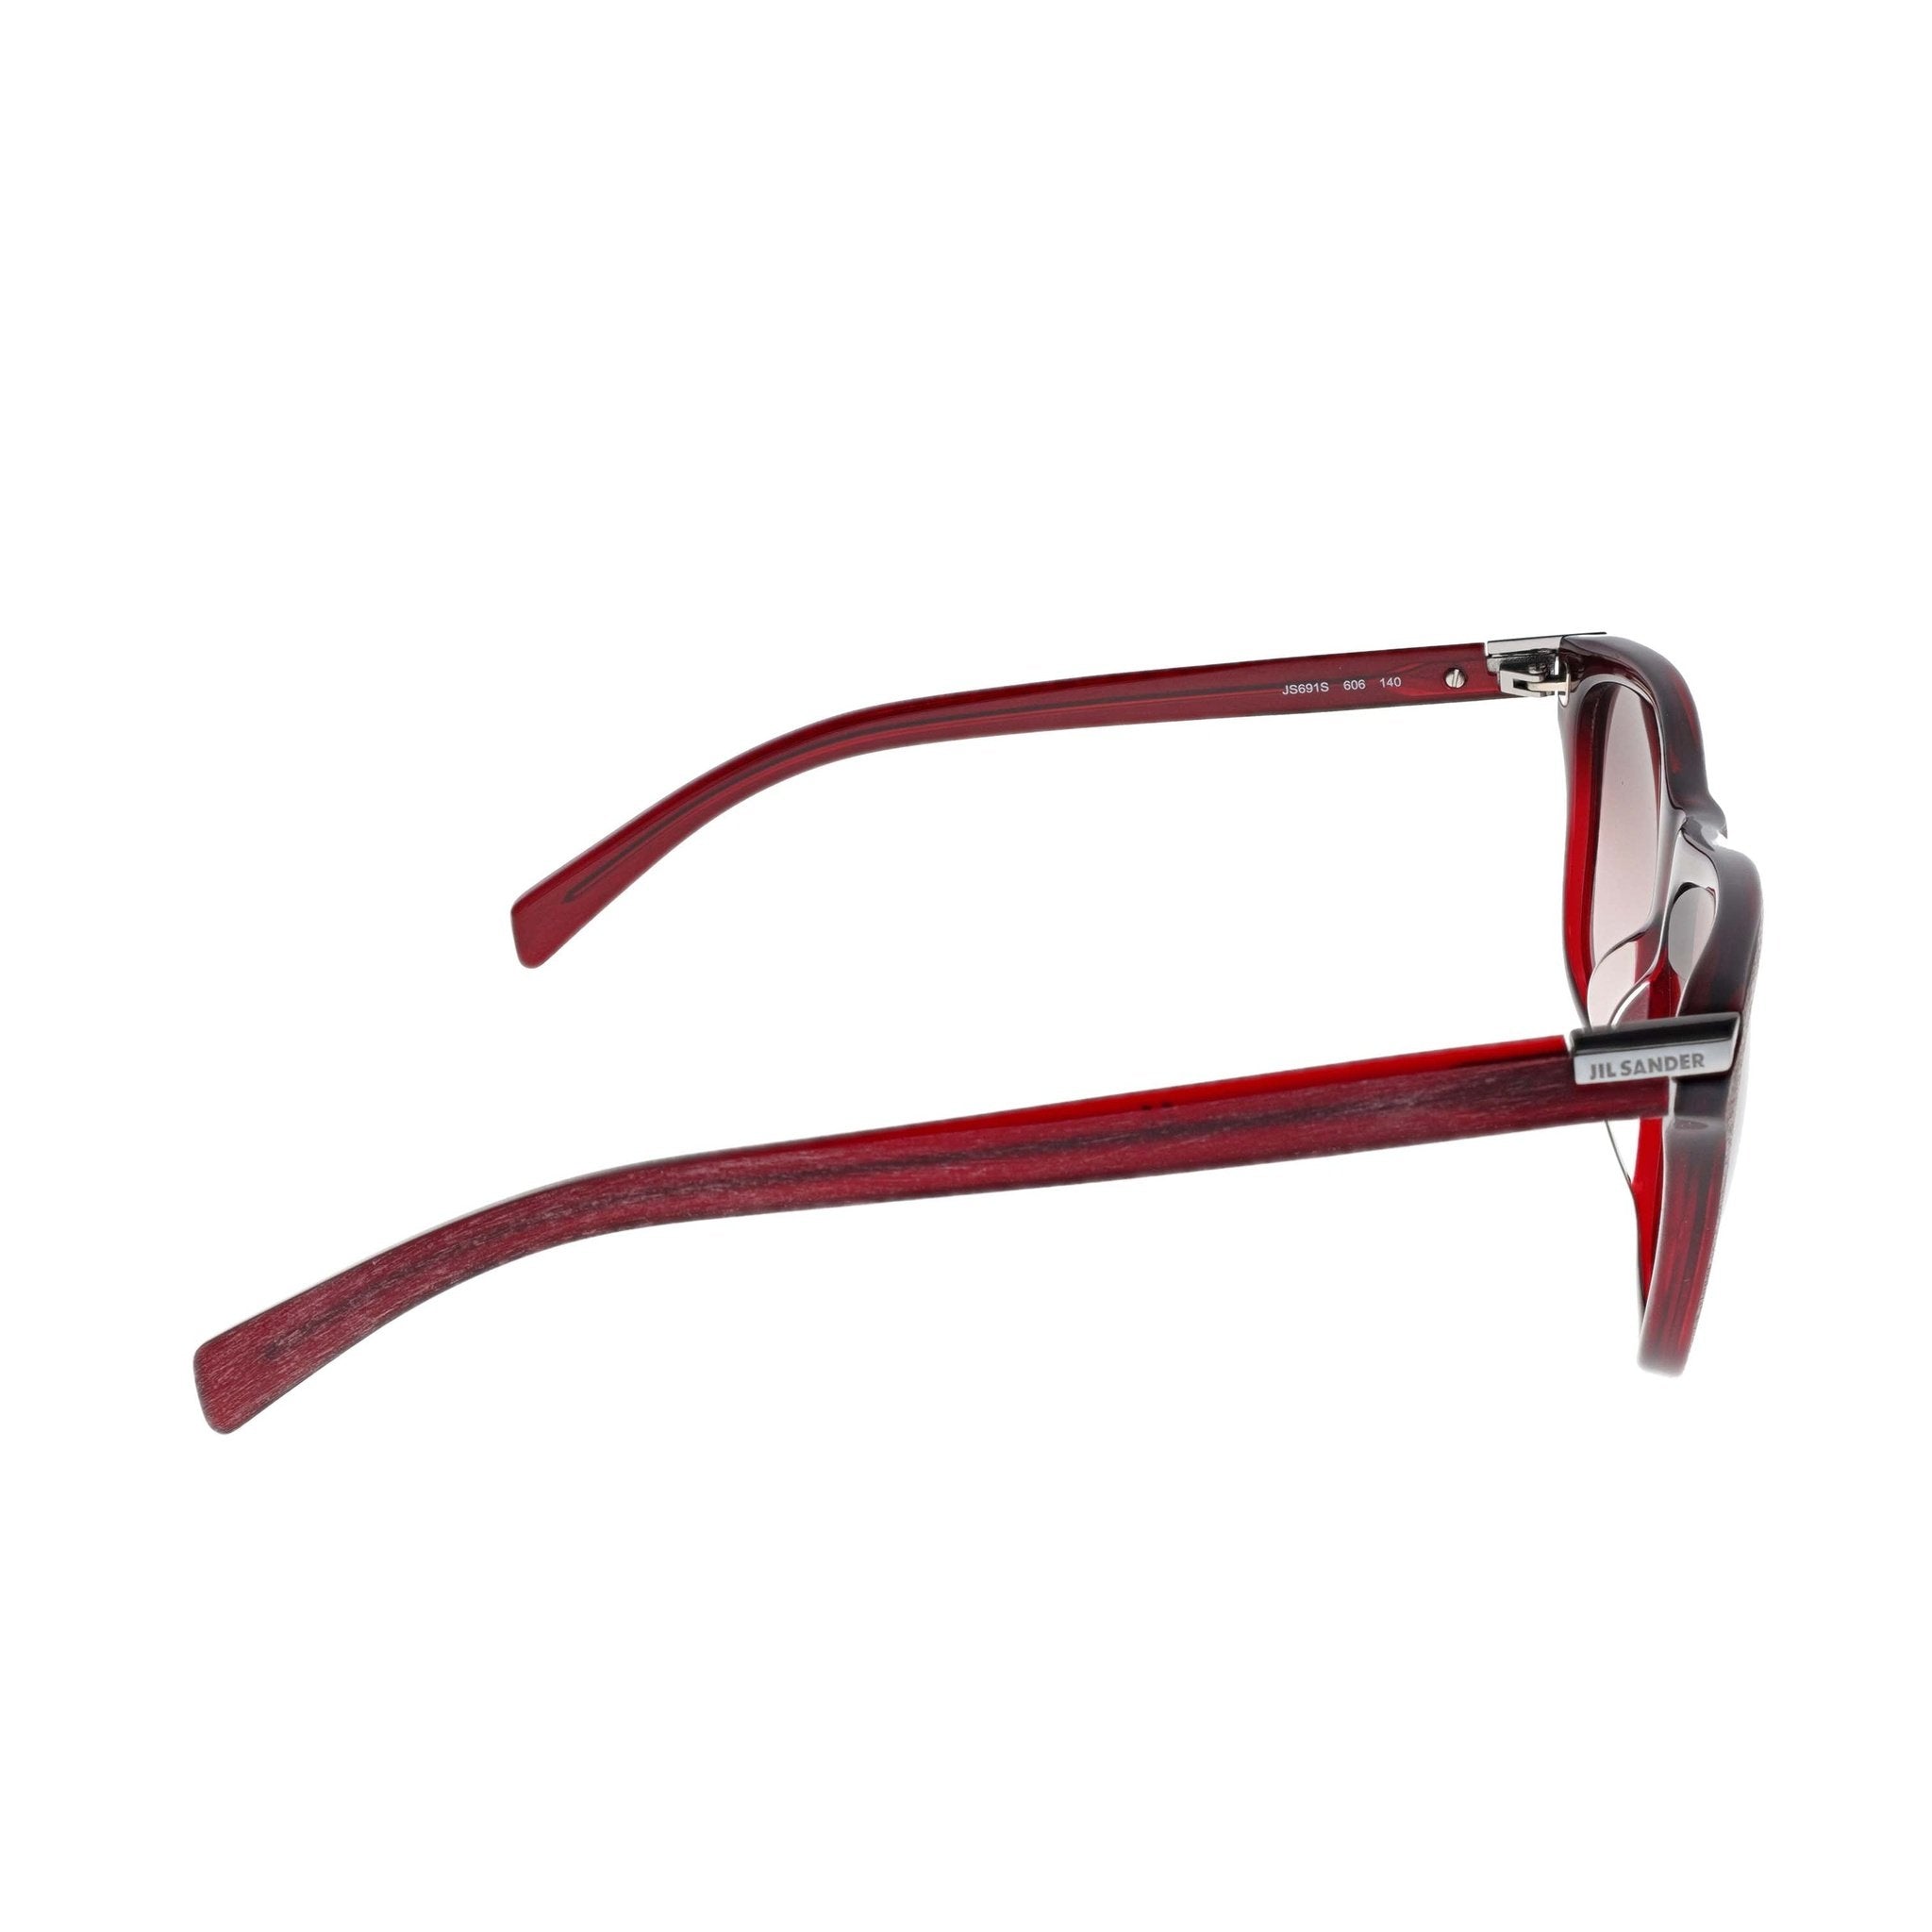 Jil Sander Sunglasses - JS691S - Red